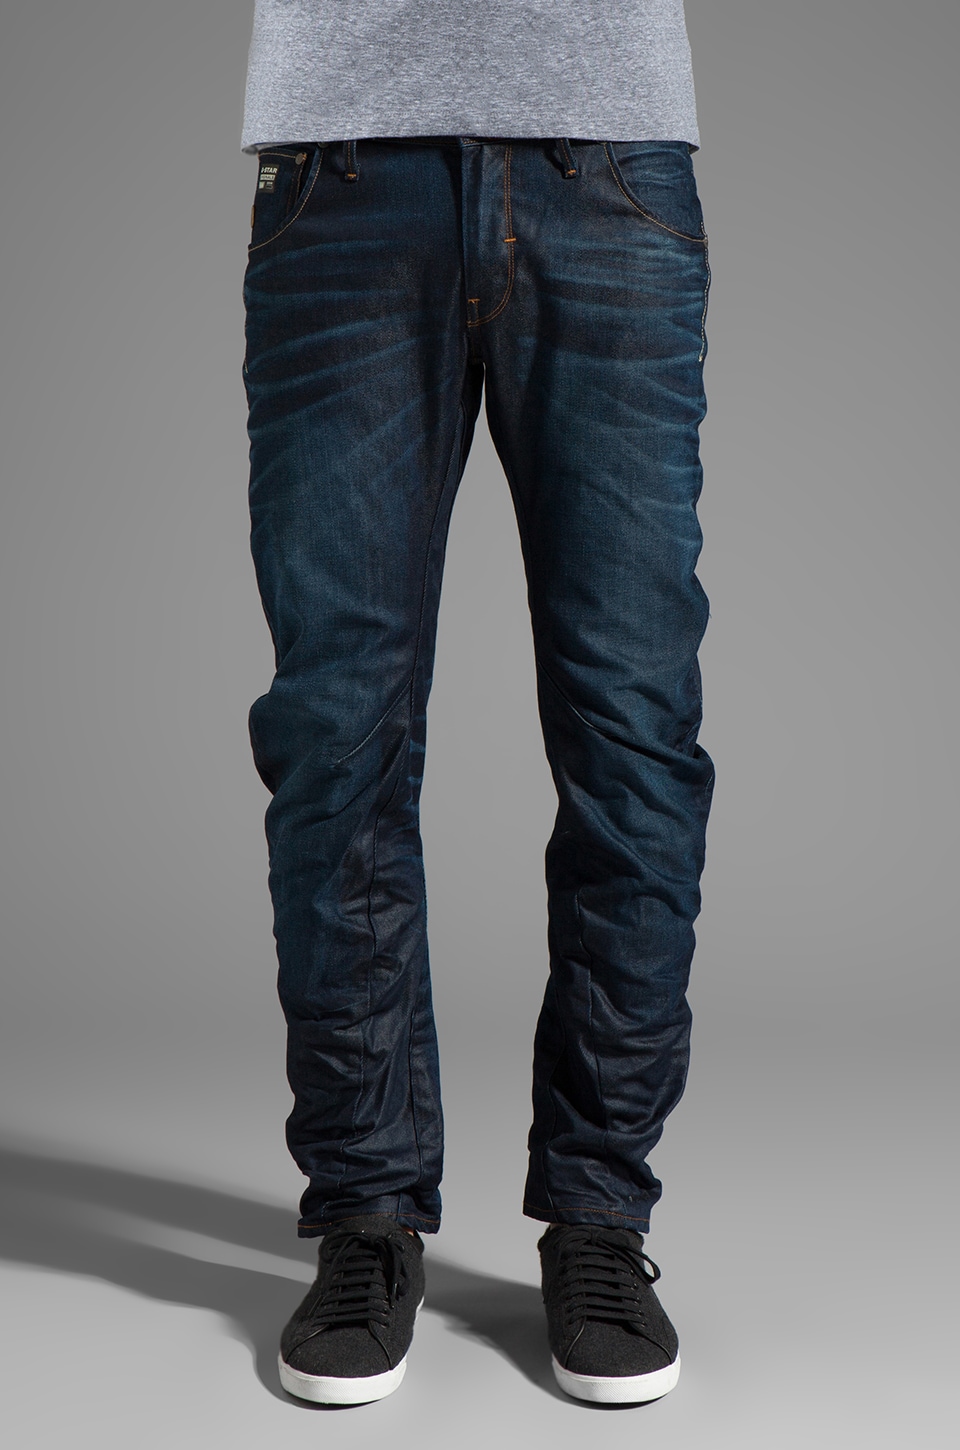 arc 3d slim jeans dark aged